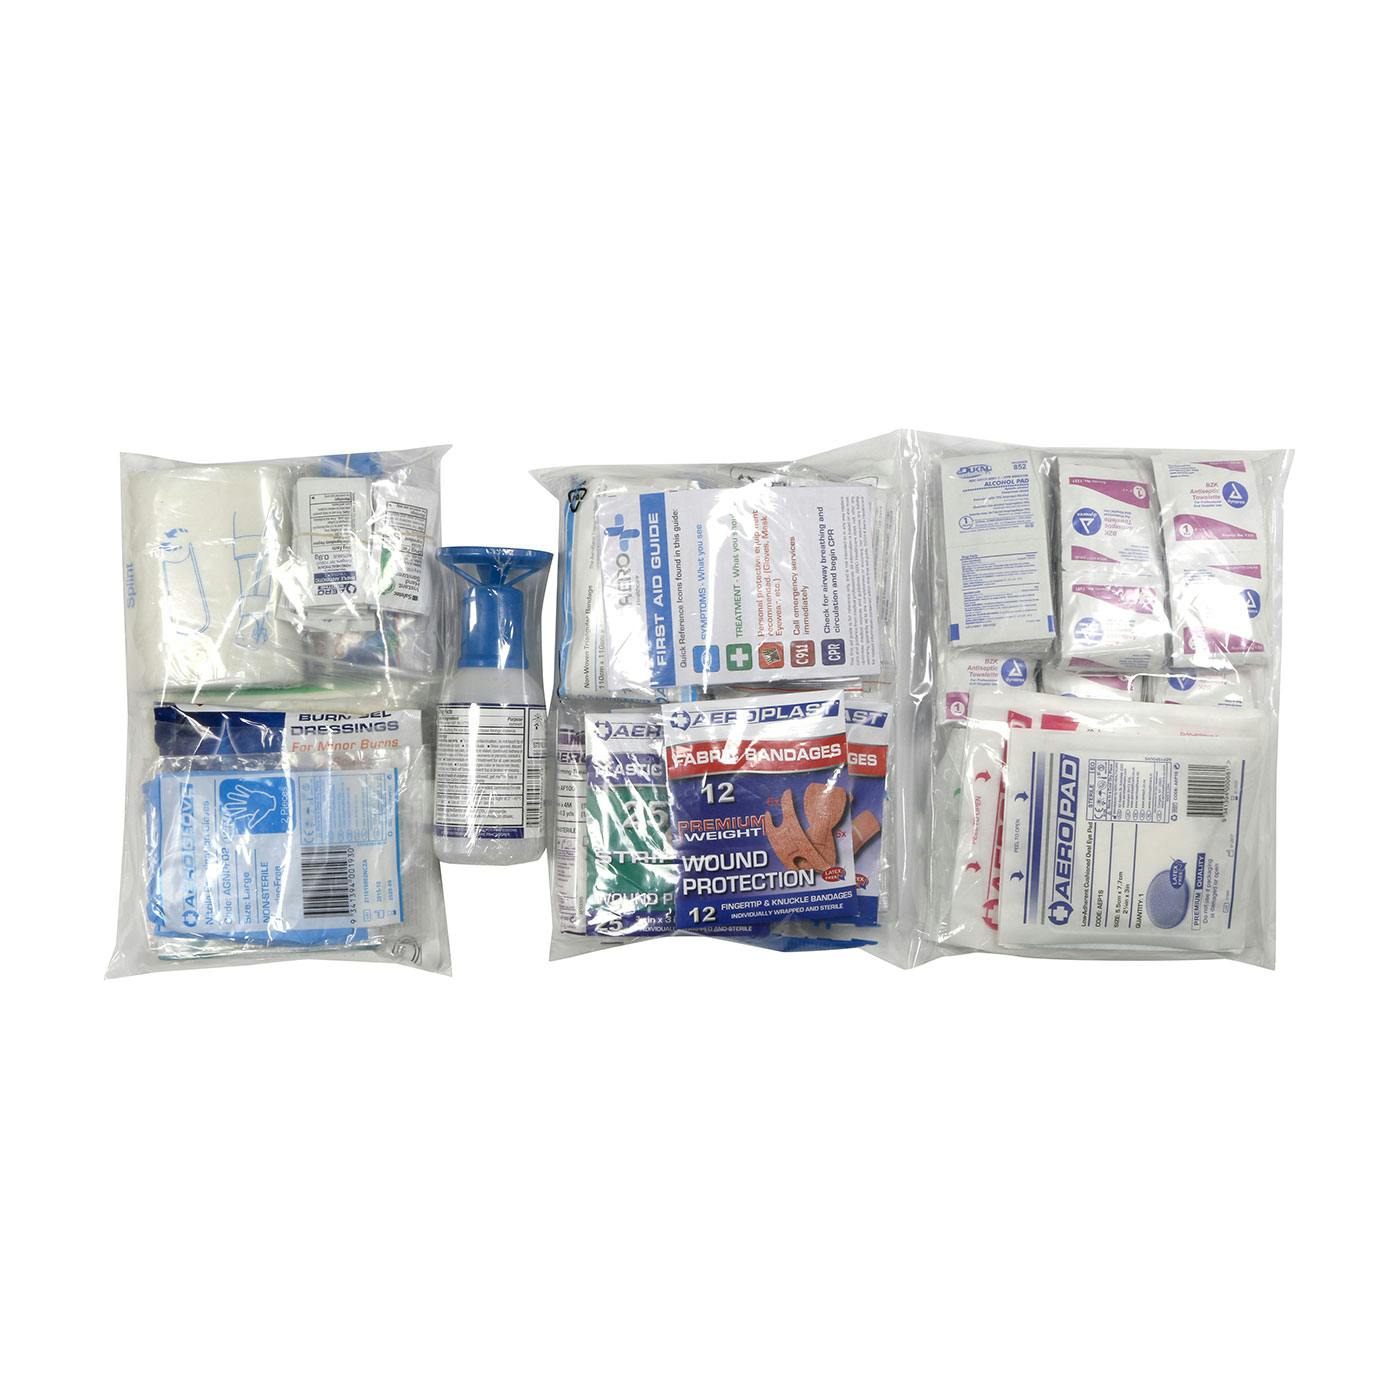 ANSI Class B First Aid Refill Pouches - 50 Person, Clear (299-15050B-RP) - KIT_1